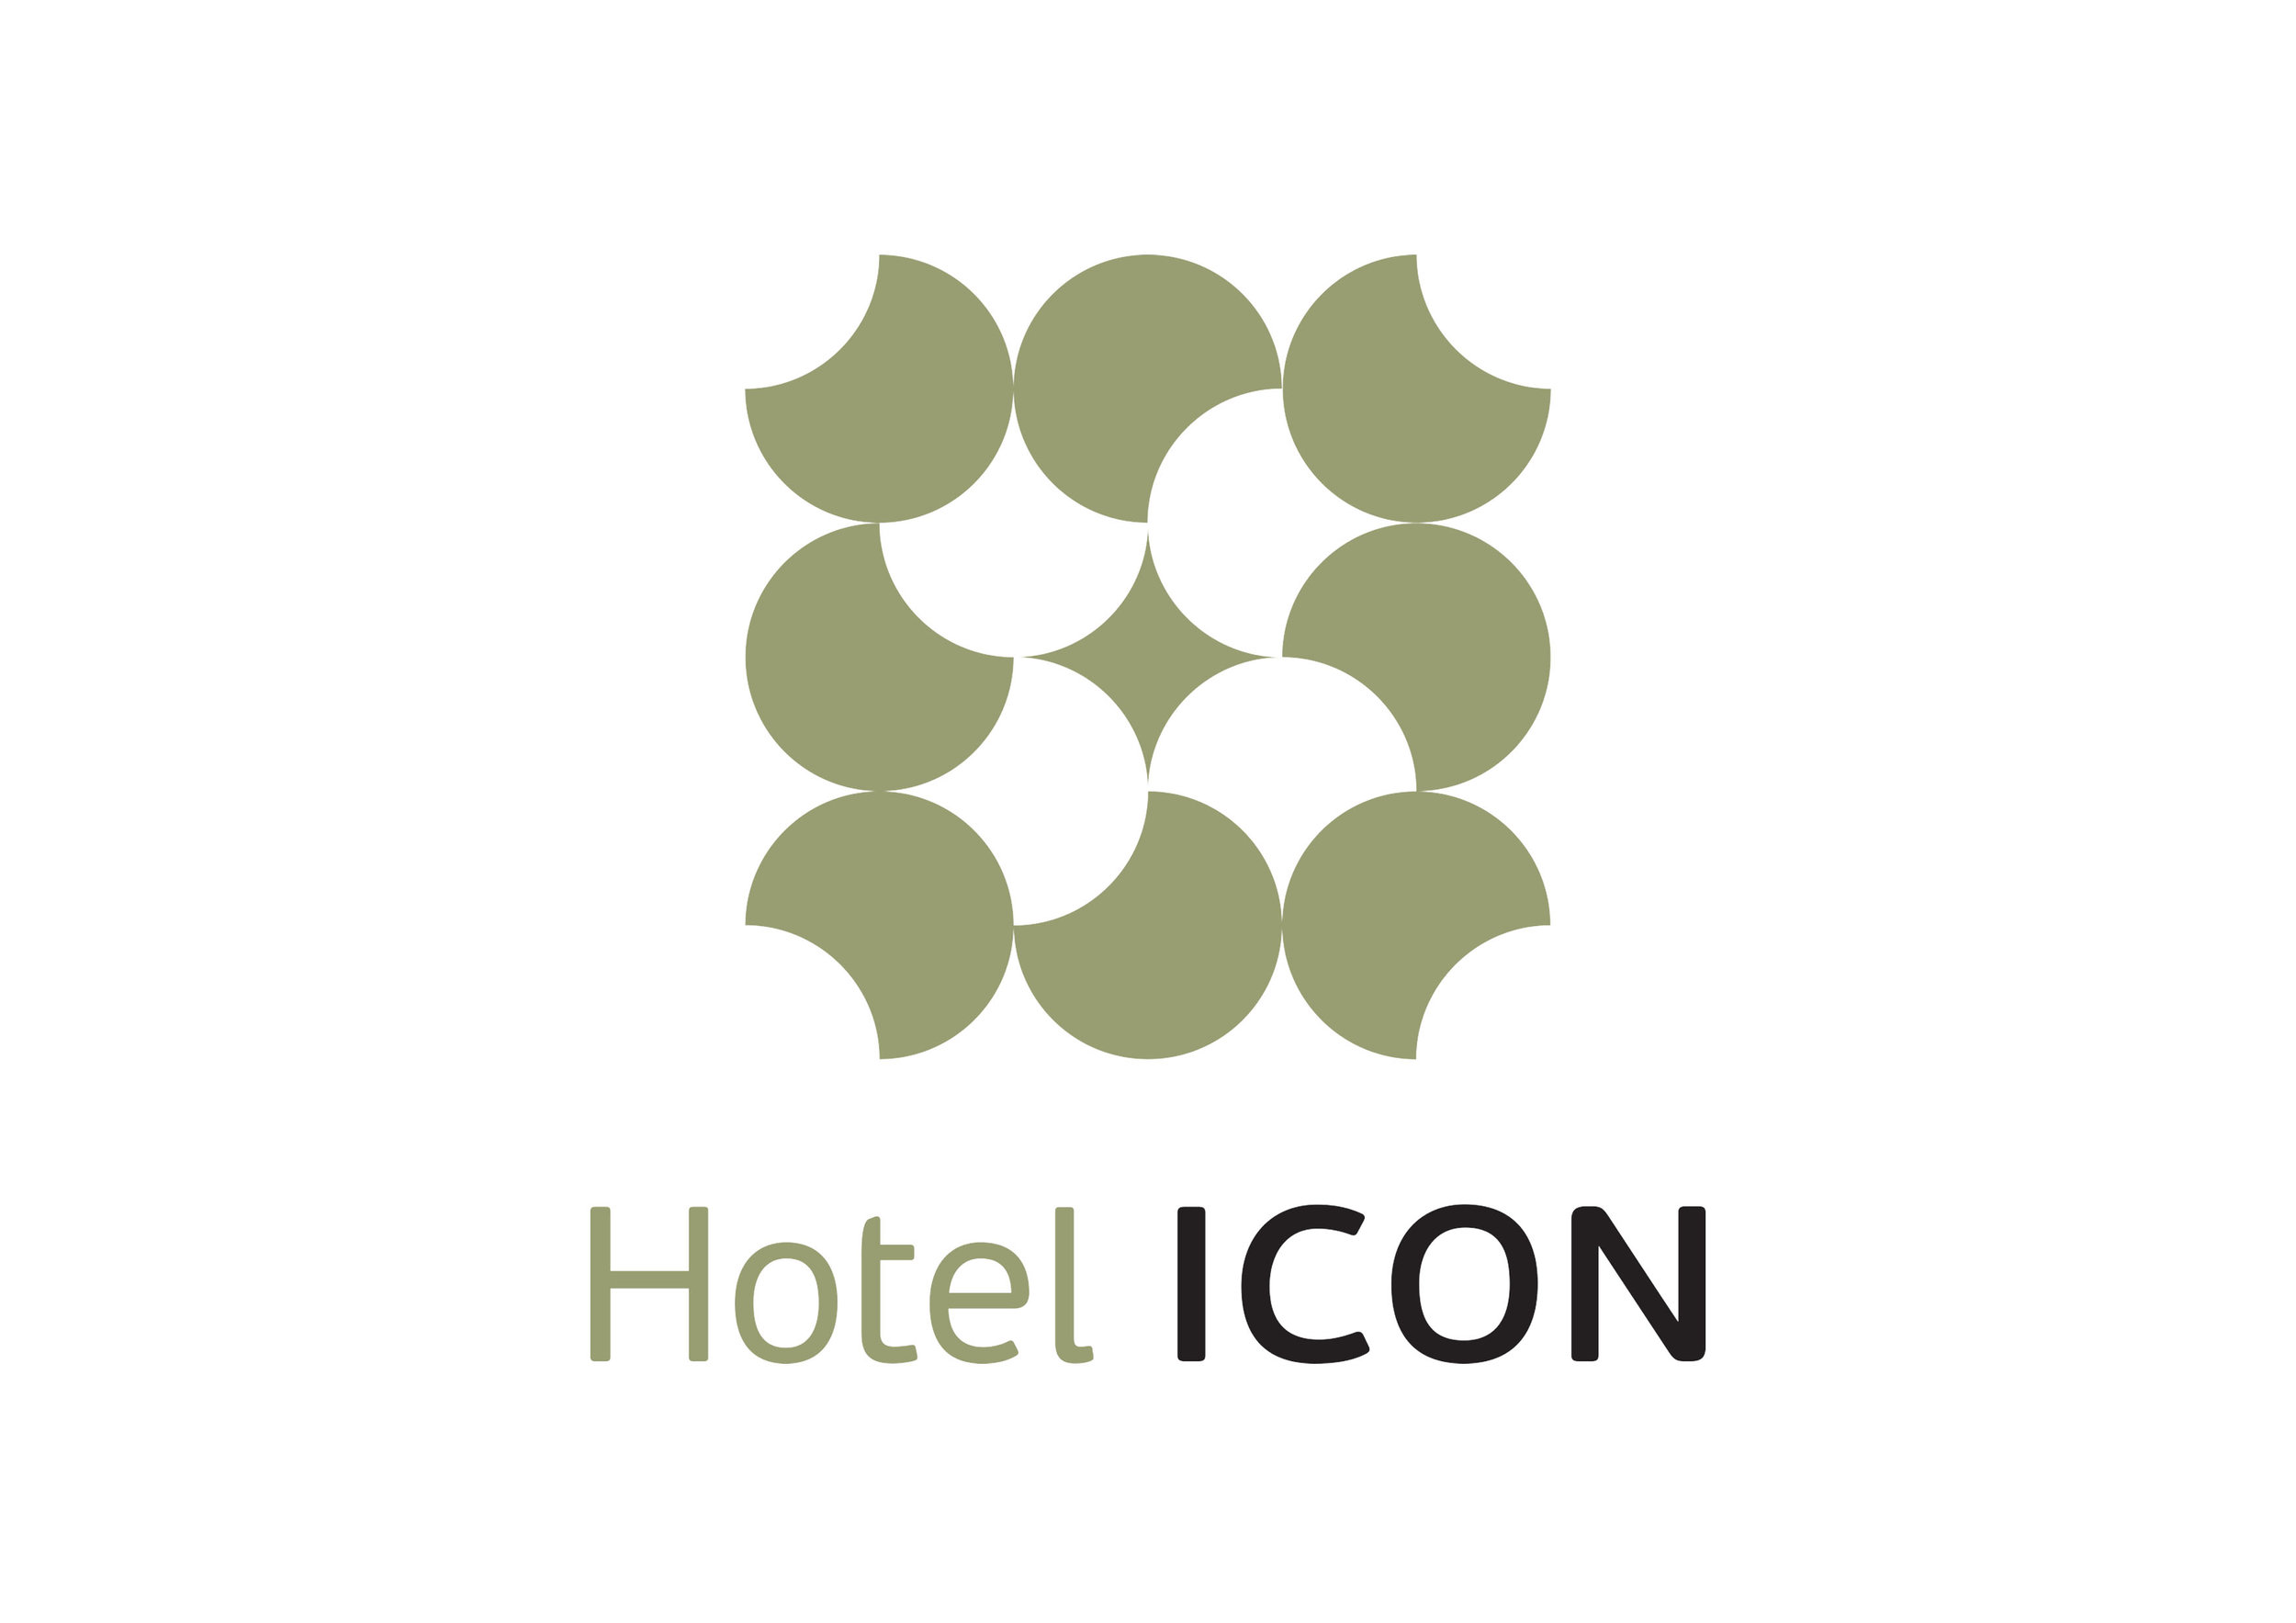 Hotel Icon.jpg